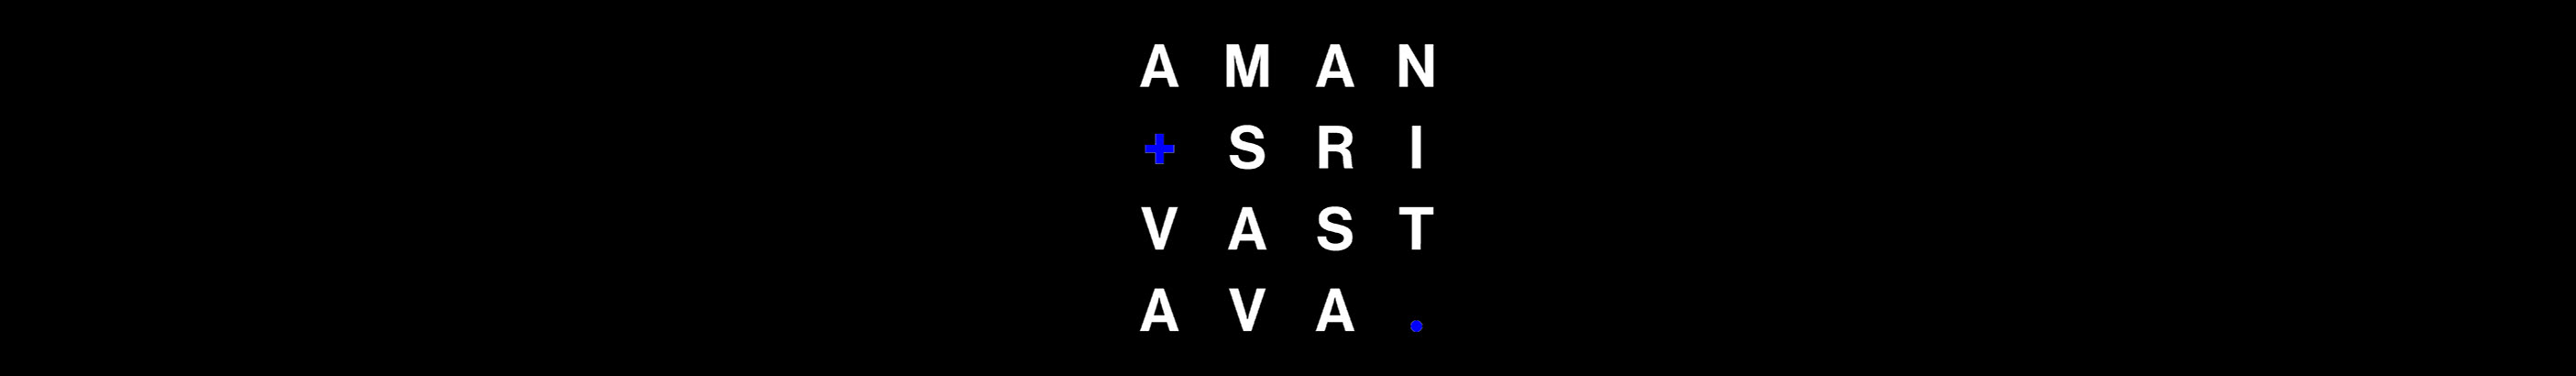 Aman Srivastava's profile banner